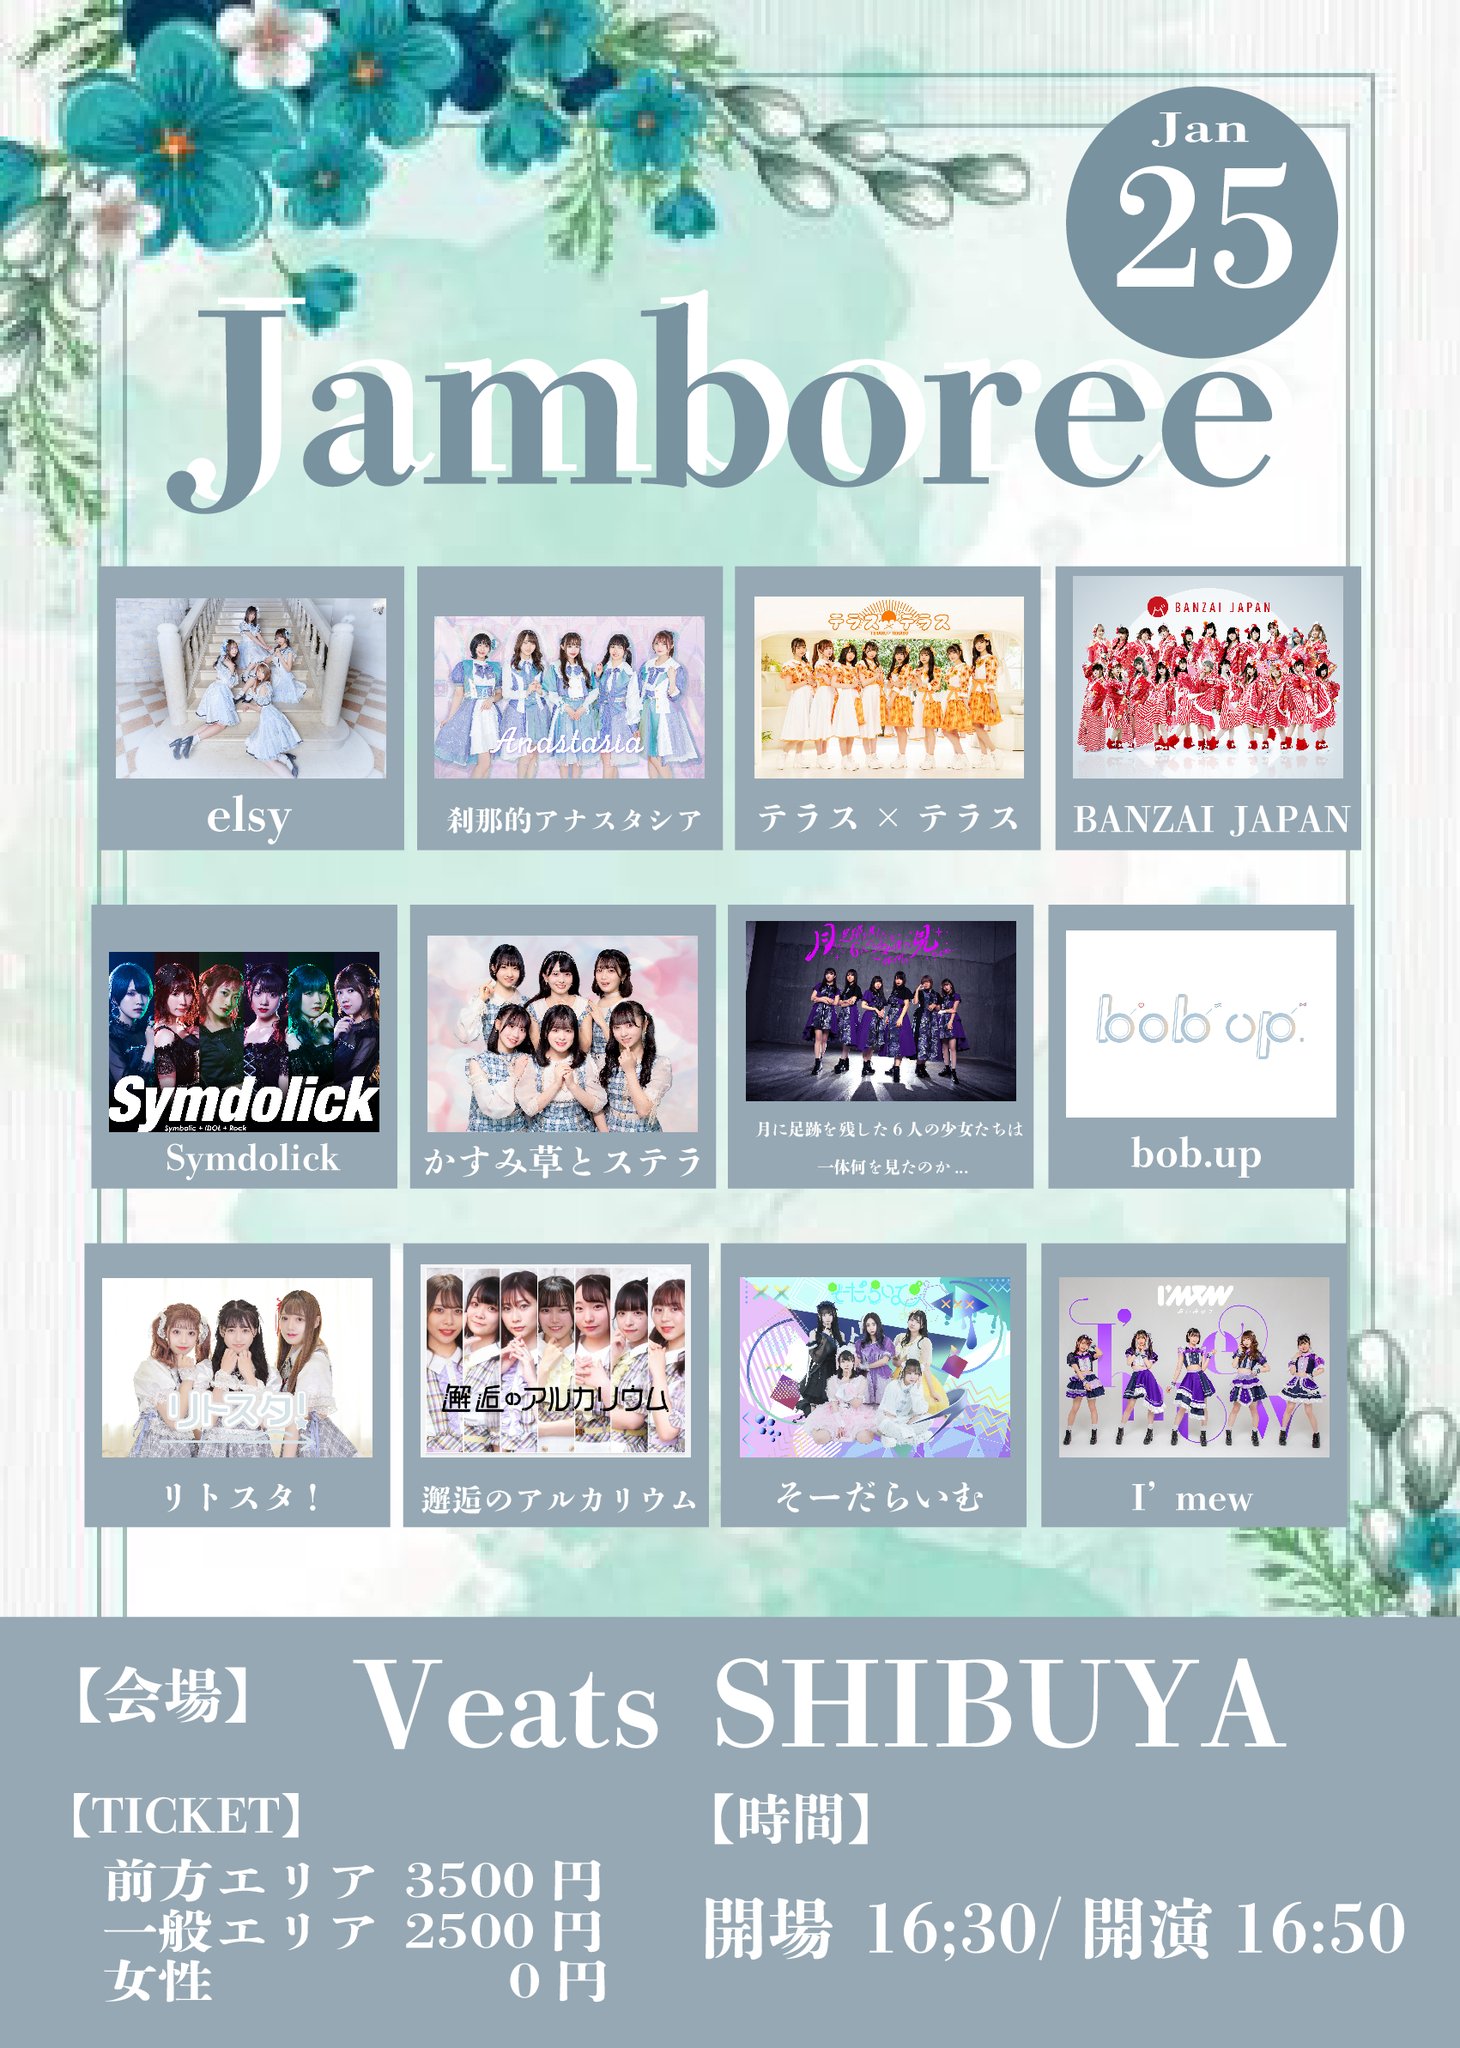 【東京】Jamboree